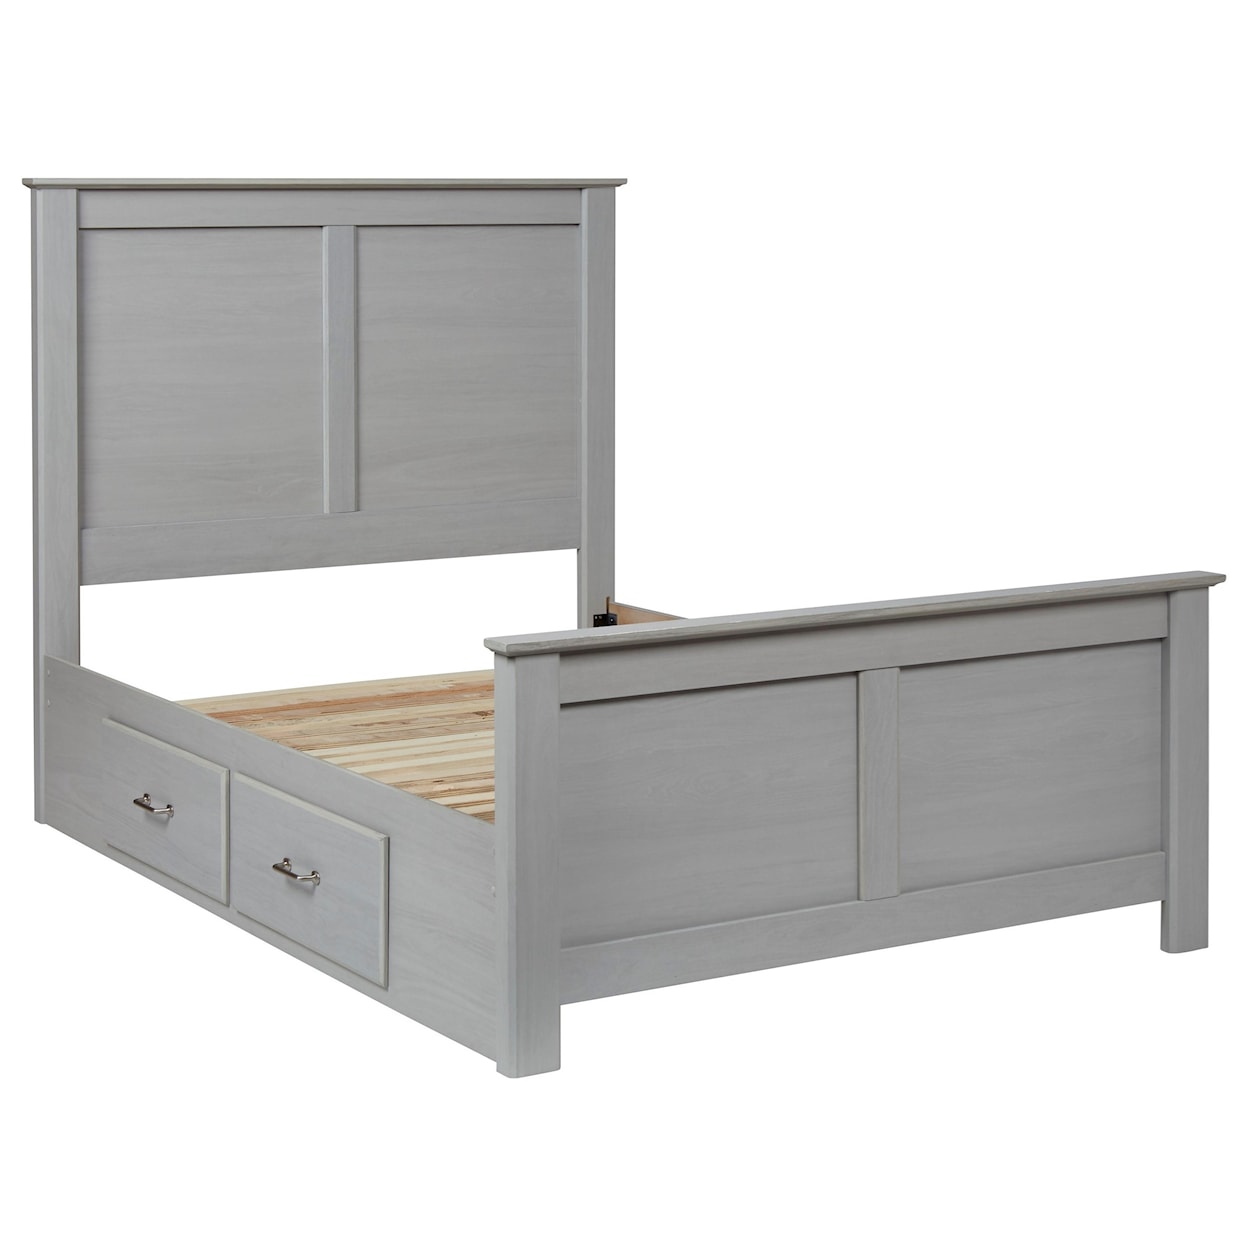 Ashley Furniture Signature Design Arcella Full Side Storage Bed